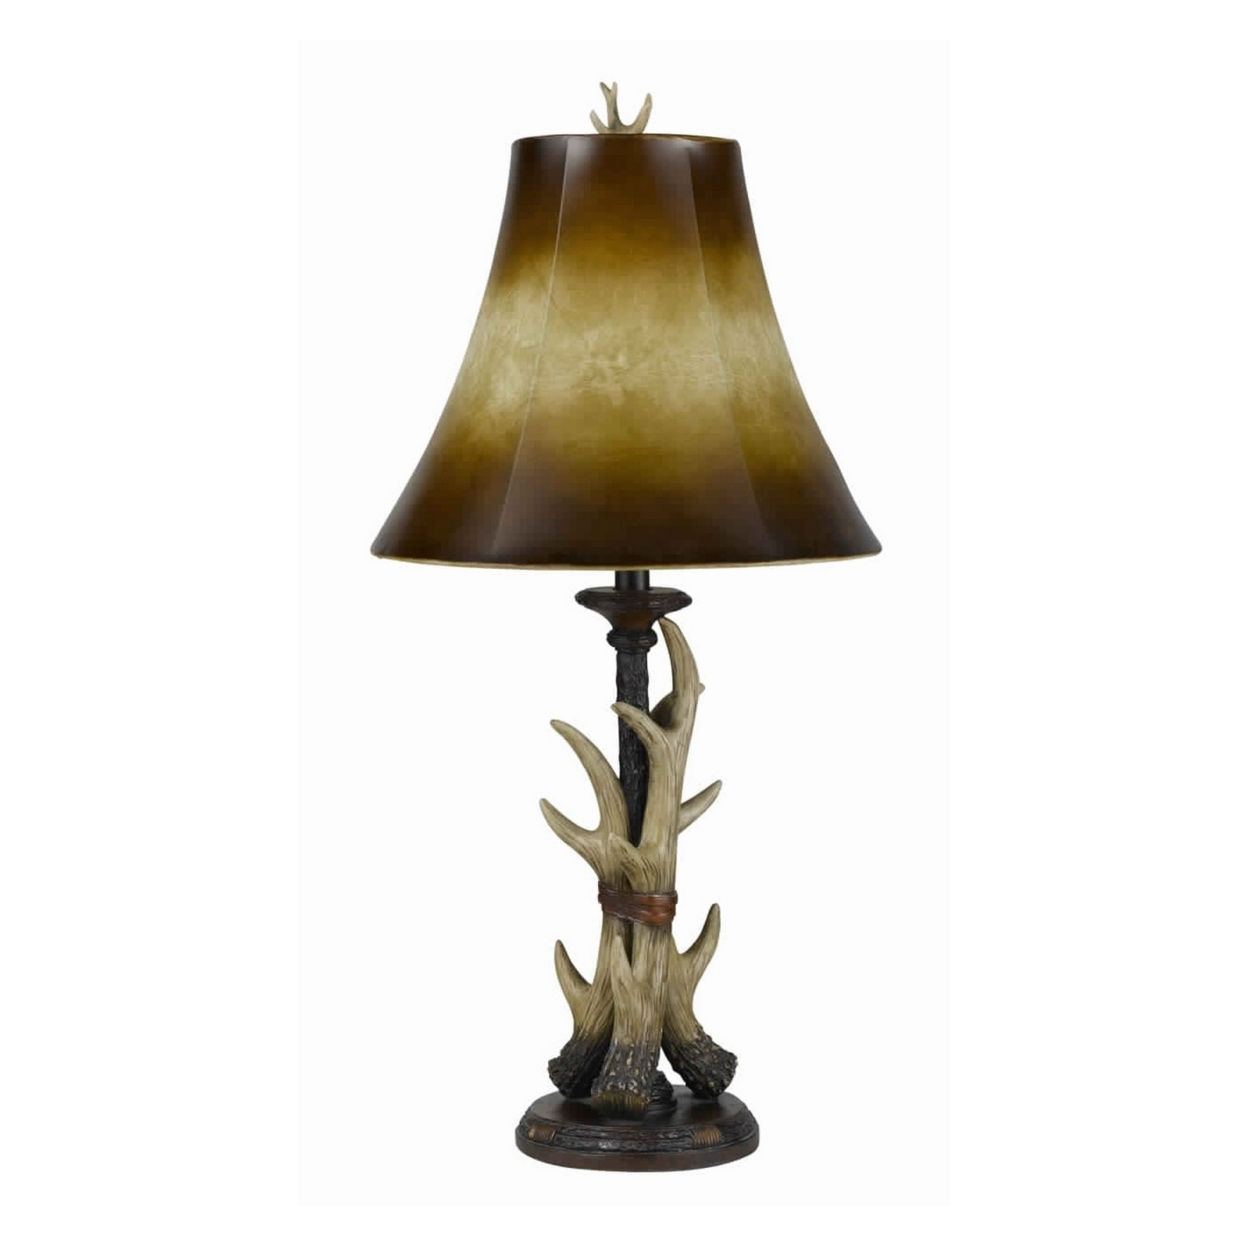 100 Watt Table Lamp With Buckhorn Design Body And Bell Shade, Brown- Saltoro Sherpi